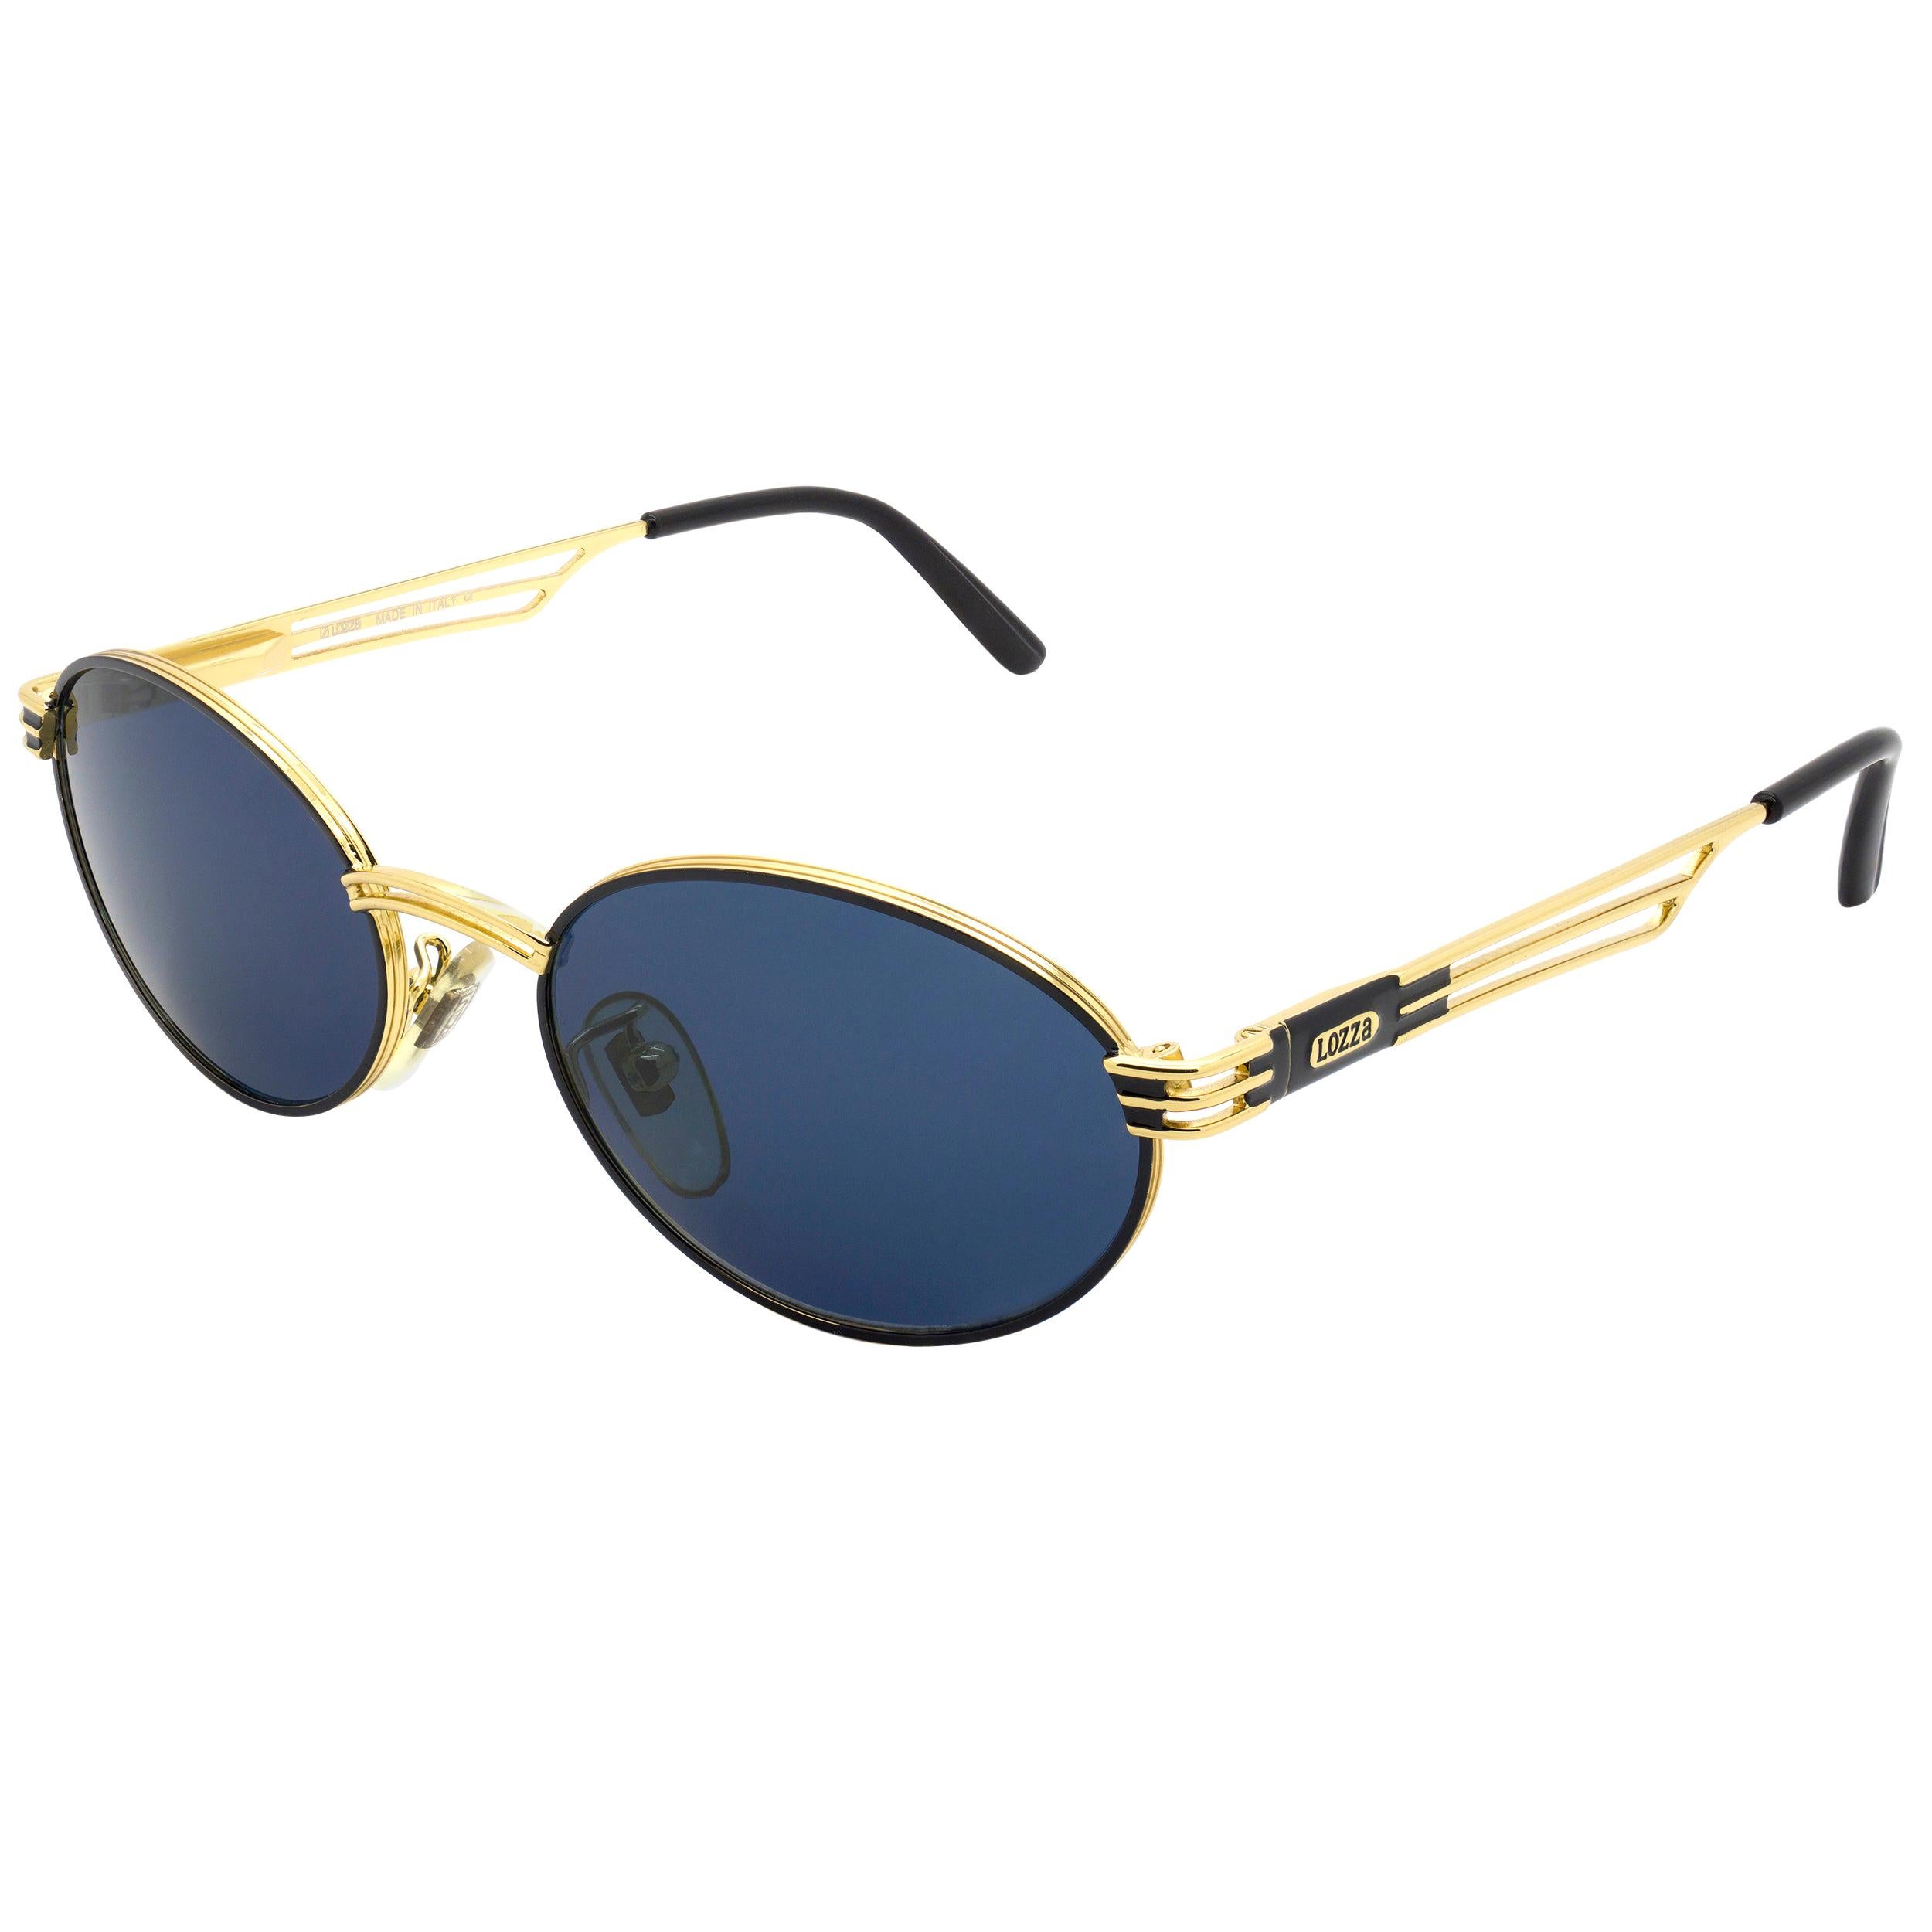 Italy vintage sunglasses by Lozza